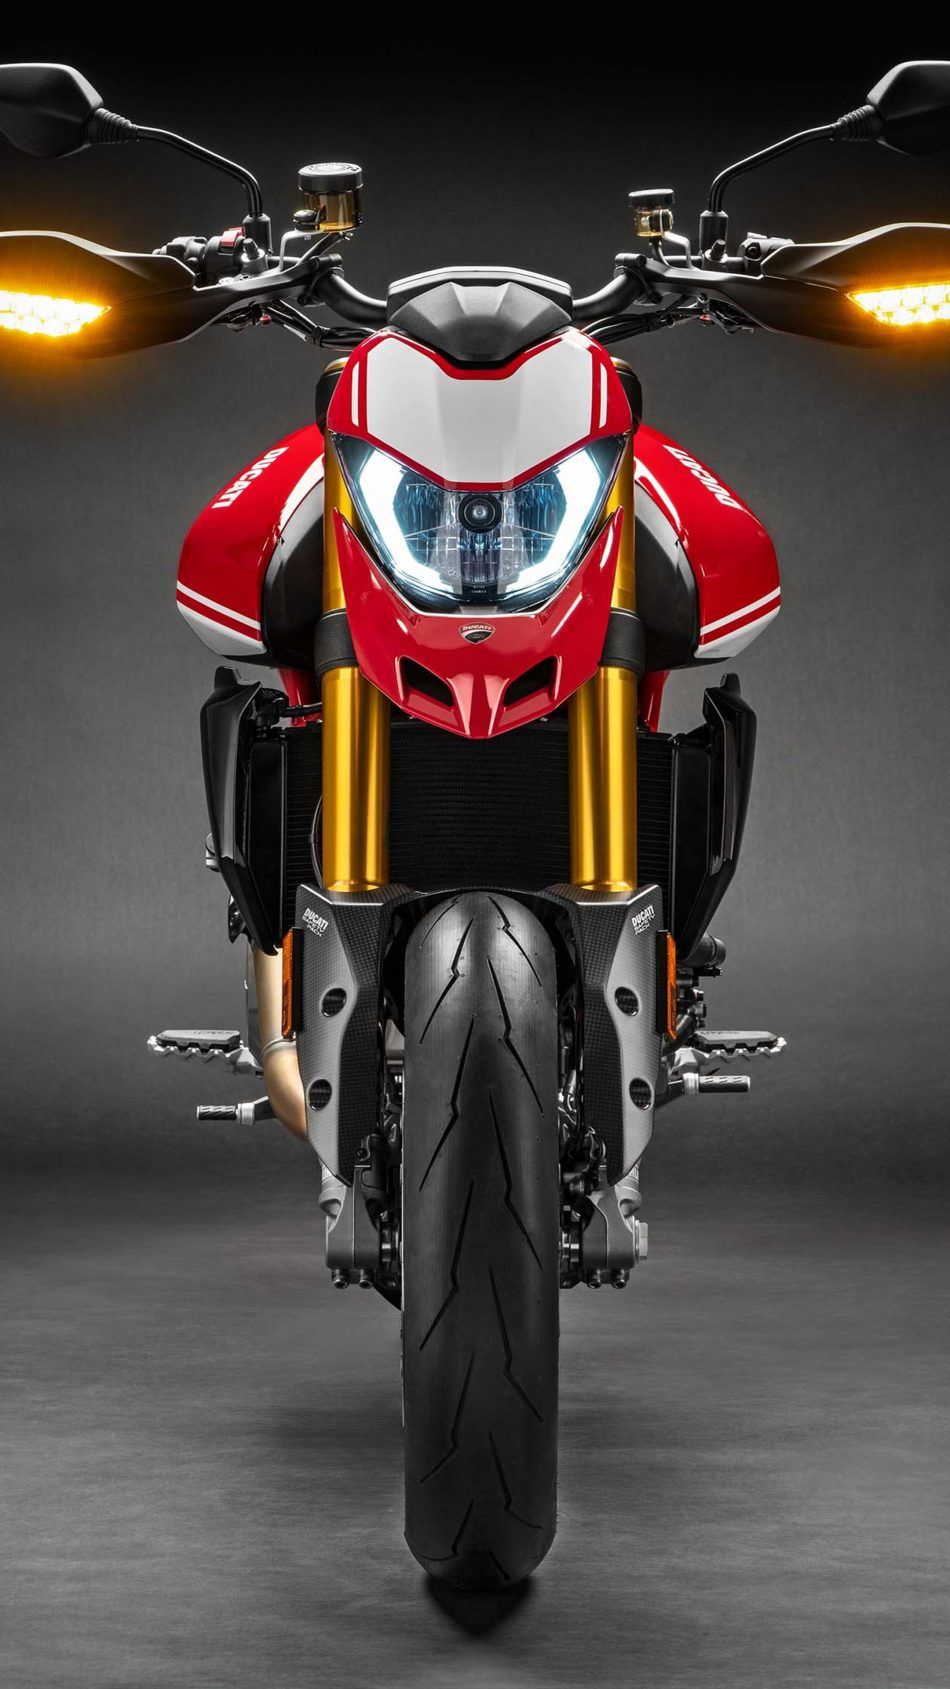 Ducati Hypermotard Sp Bike Wallpaper